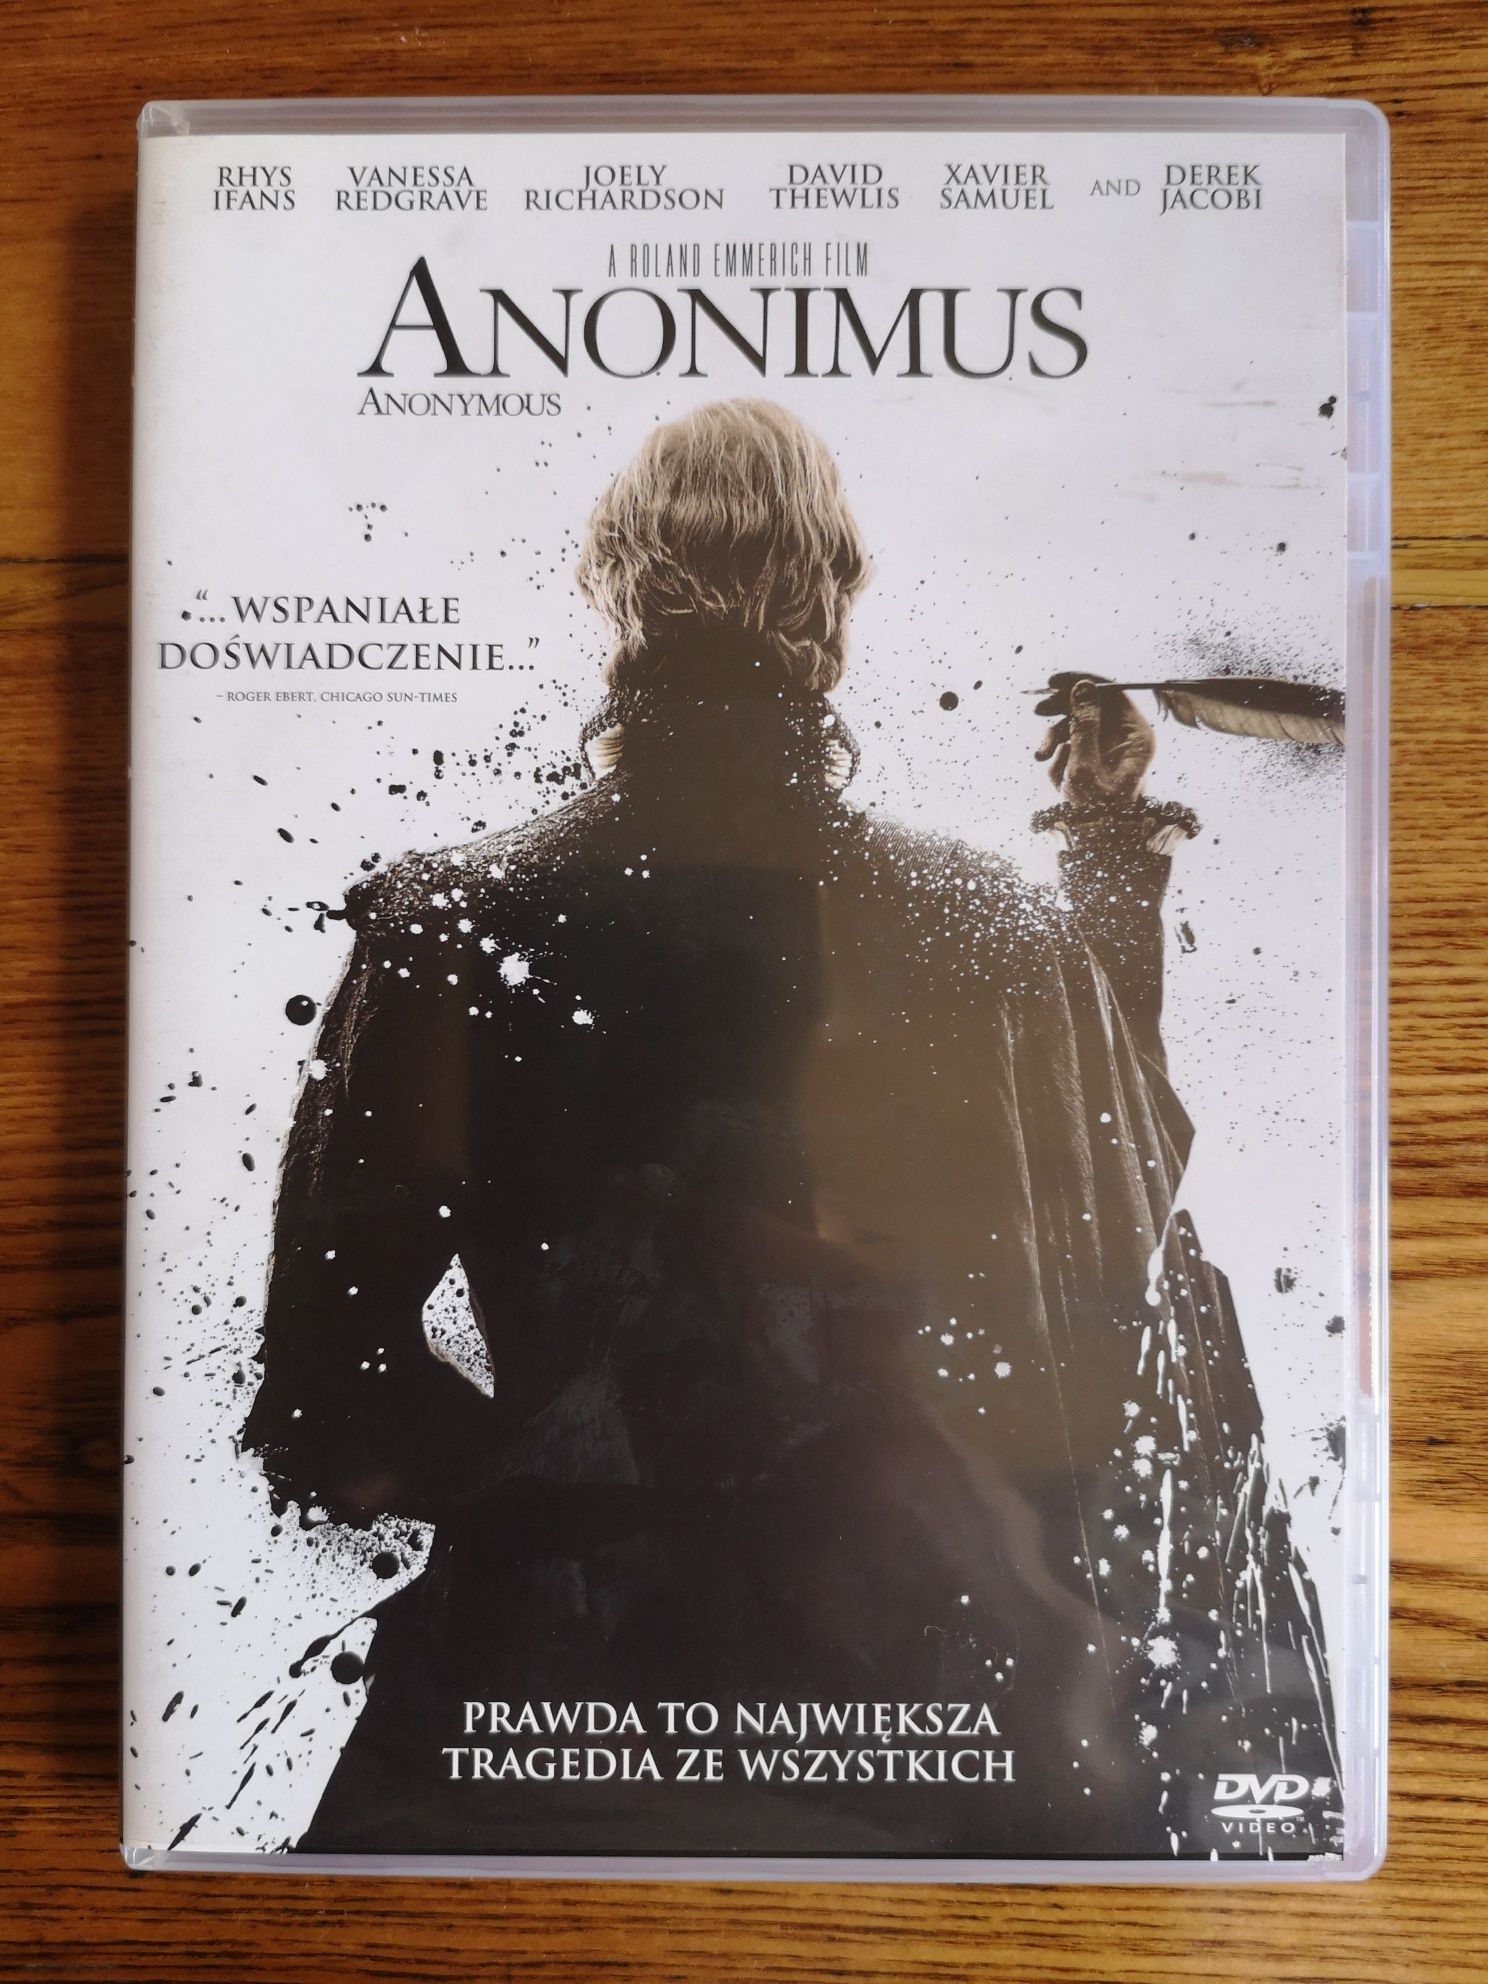 Płyta DVD: Anonimus - Rhys Ifans, Vanessa Redgrave